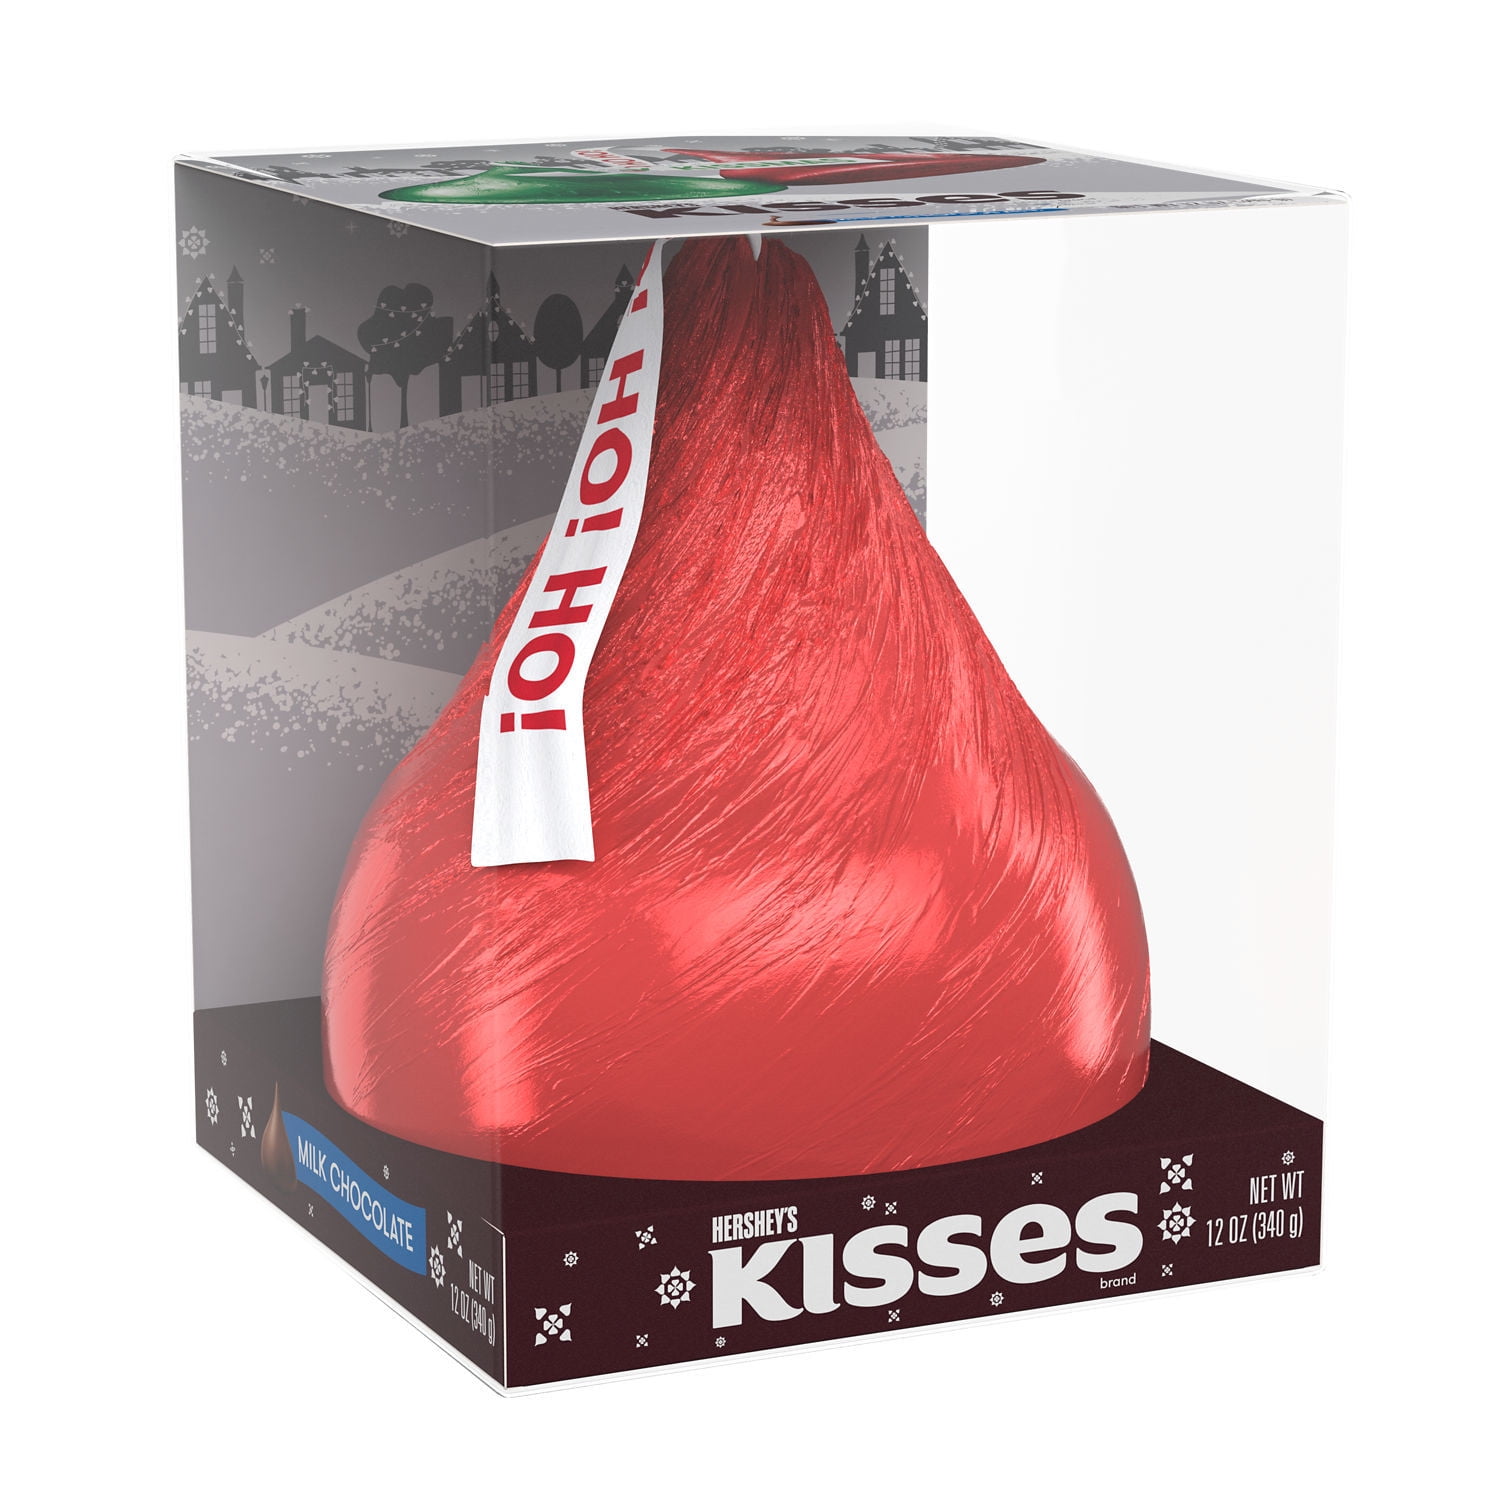 HERSHEY'S, KISSES Milk Chocolate Candy, Christmas, 12 oz, Gift Box